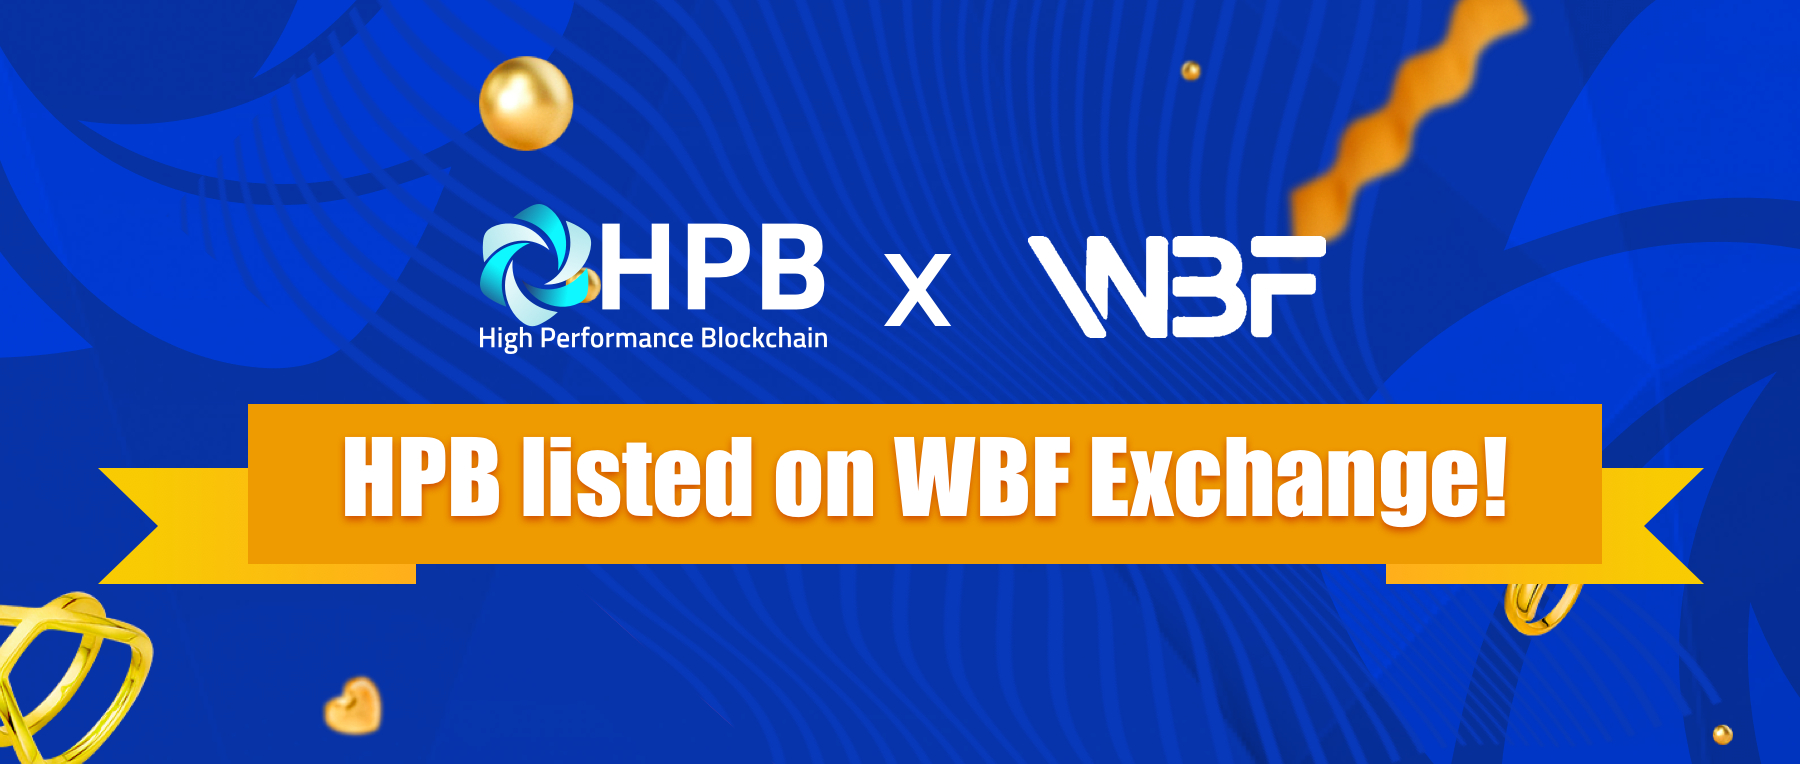 HPB listed on WBF Exchange! image